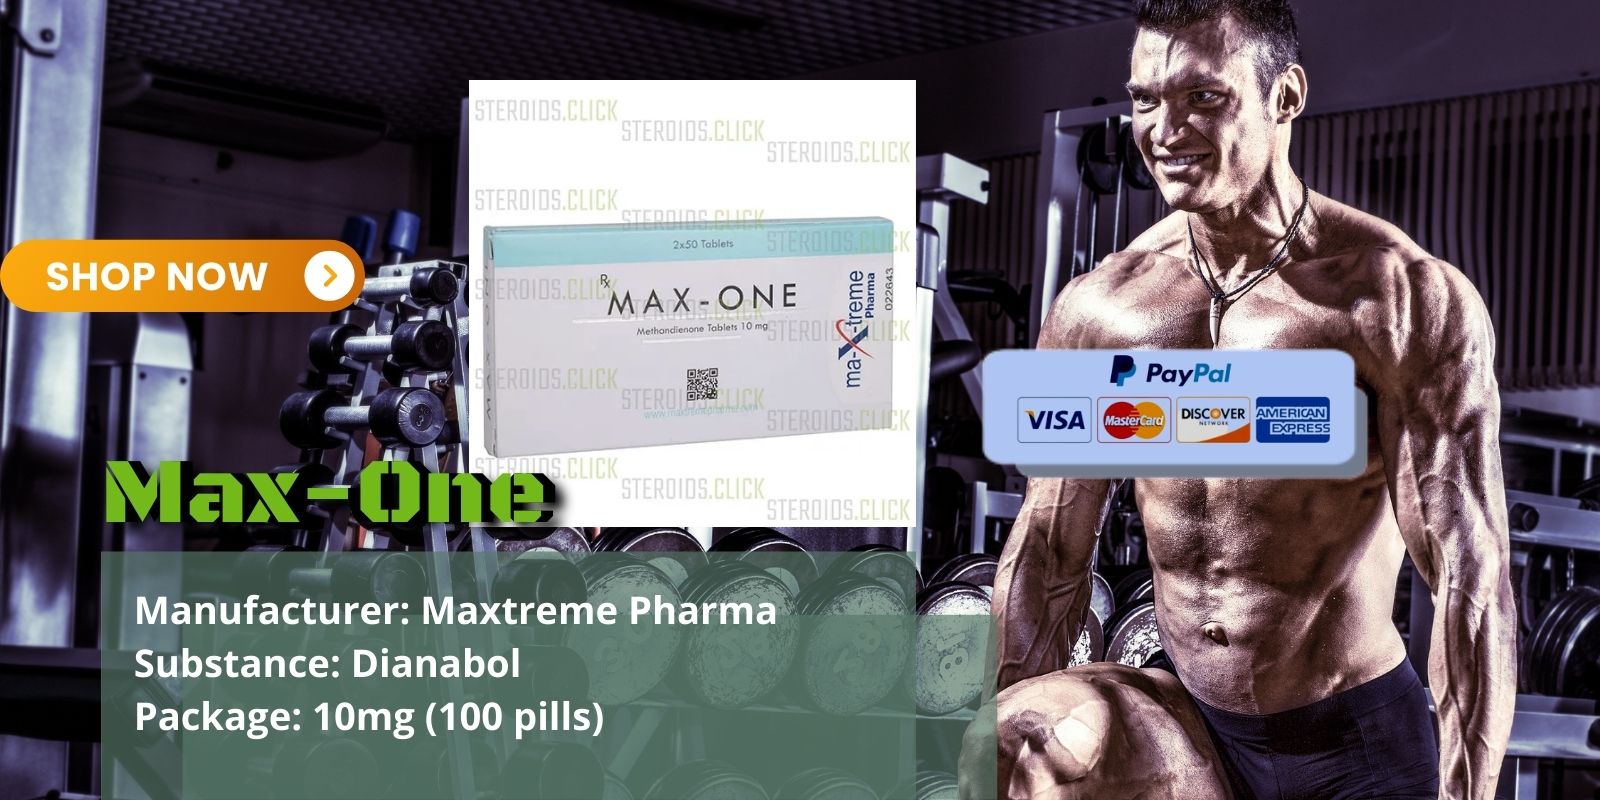 steroids.click max-one